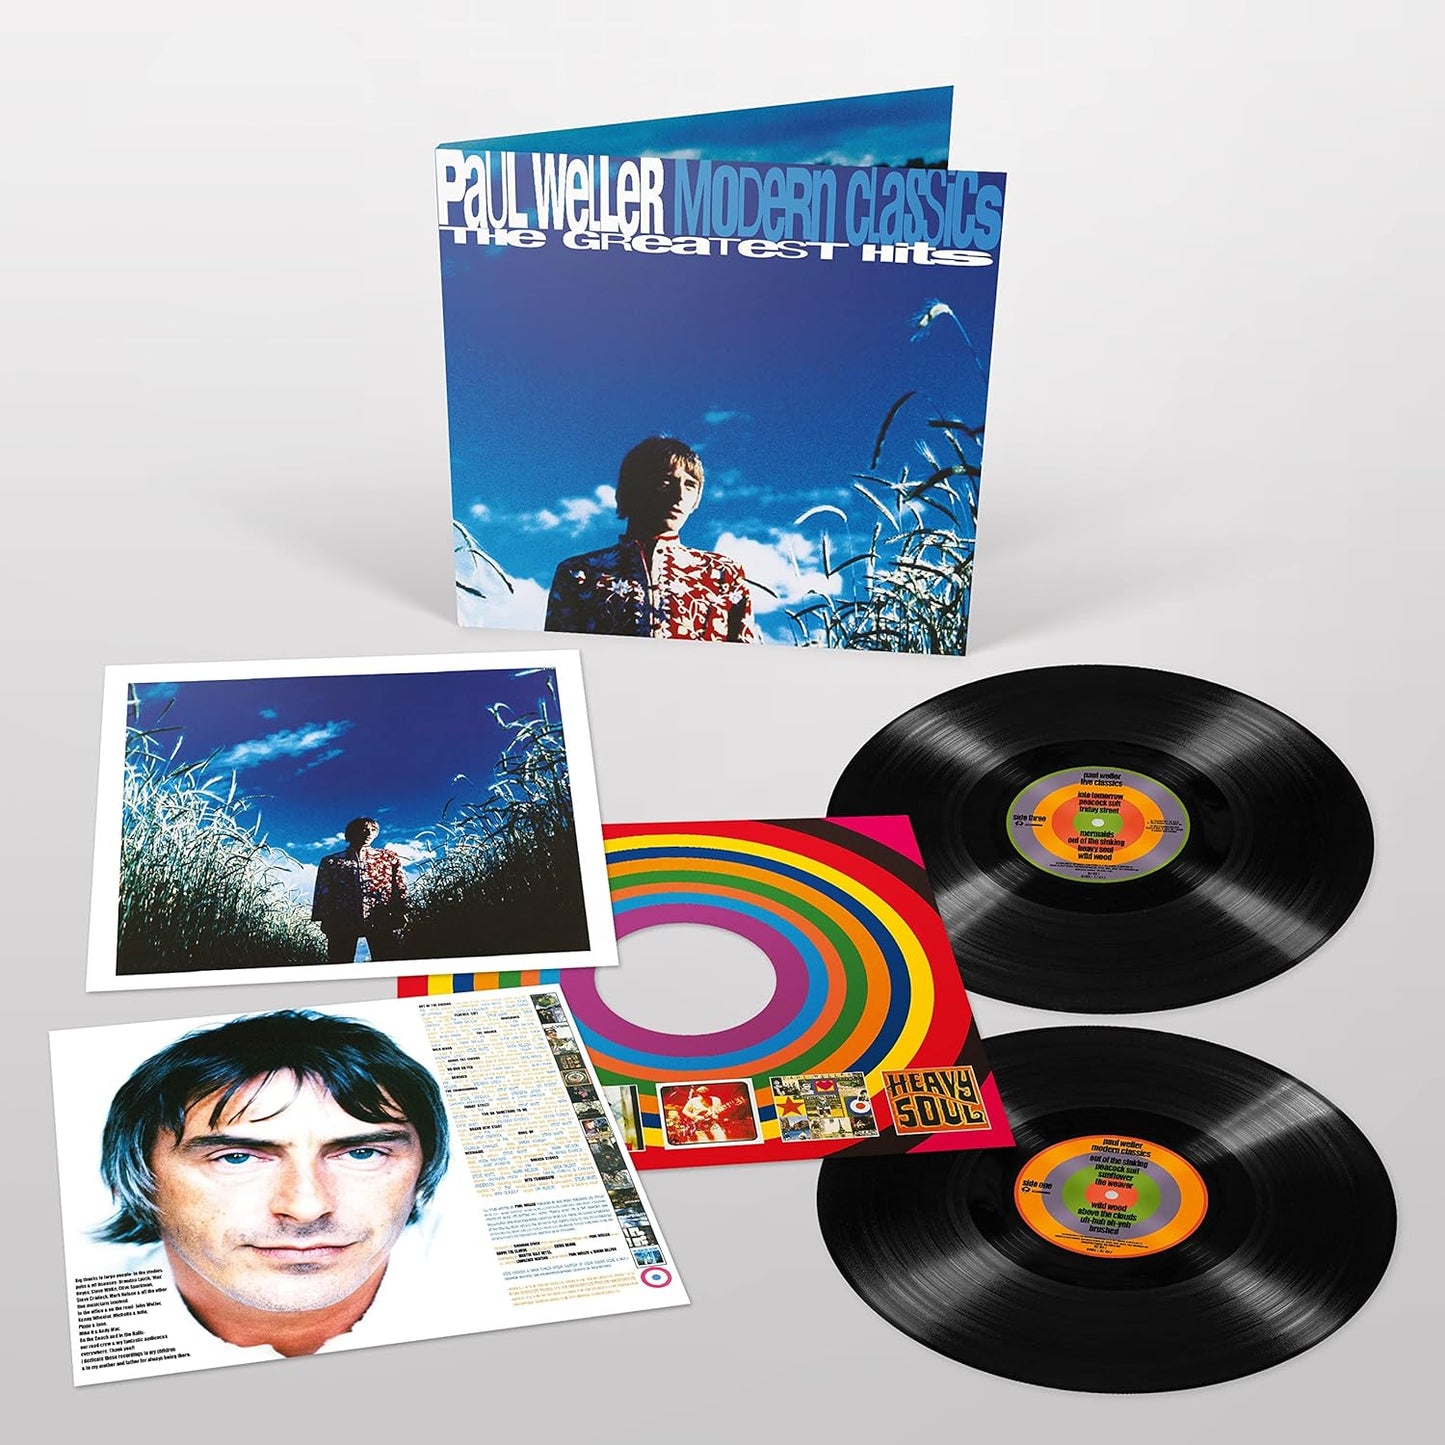 Paul Weller Modern Classics (The Greatest Hits) - Ireland Vinyl